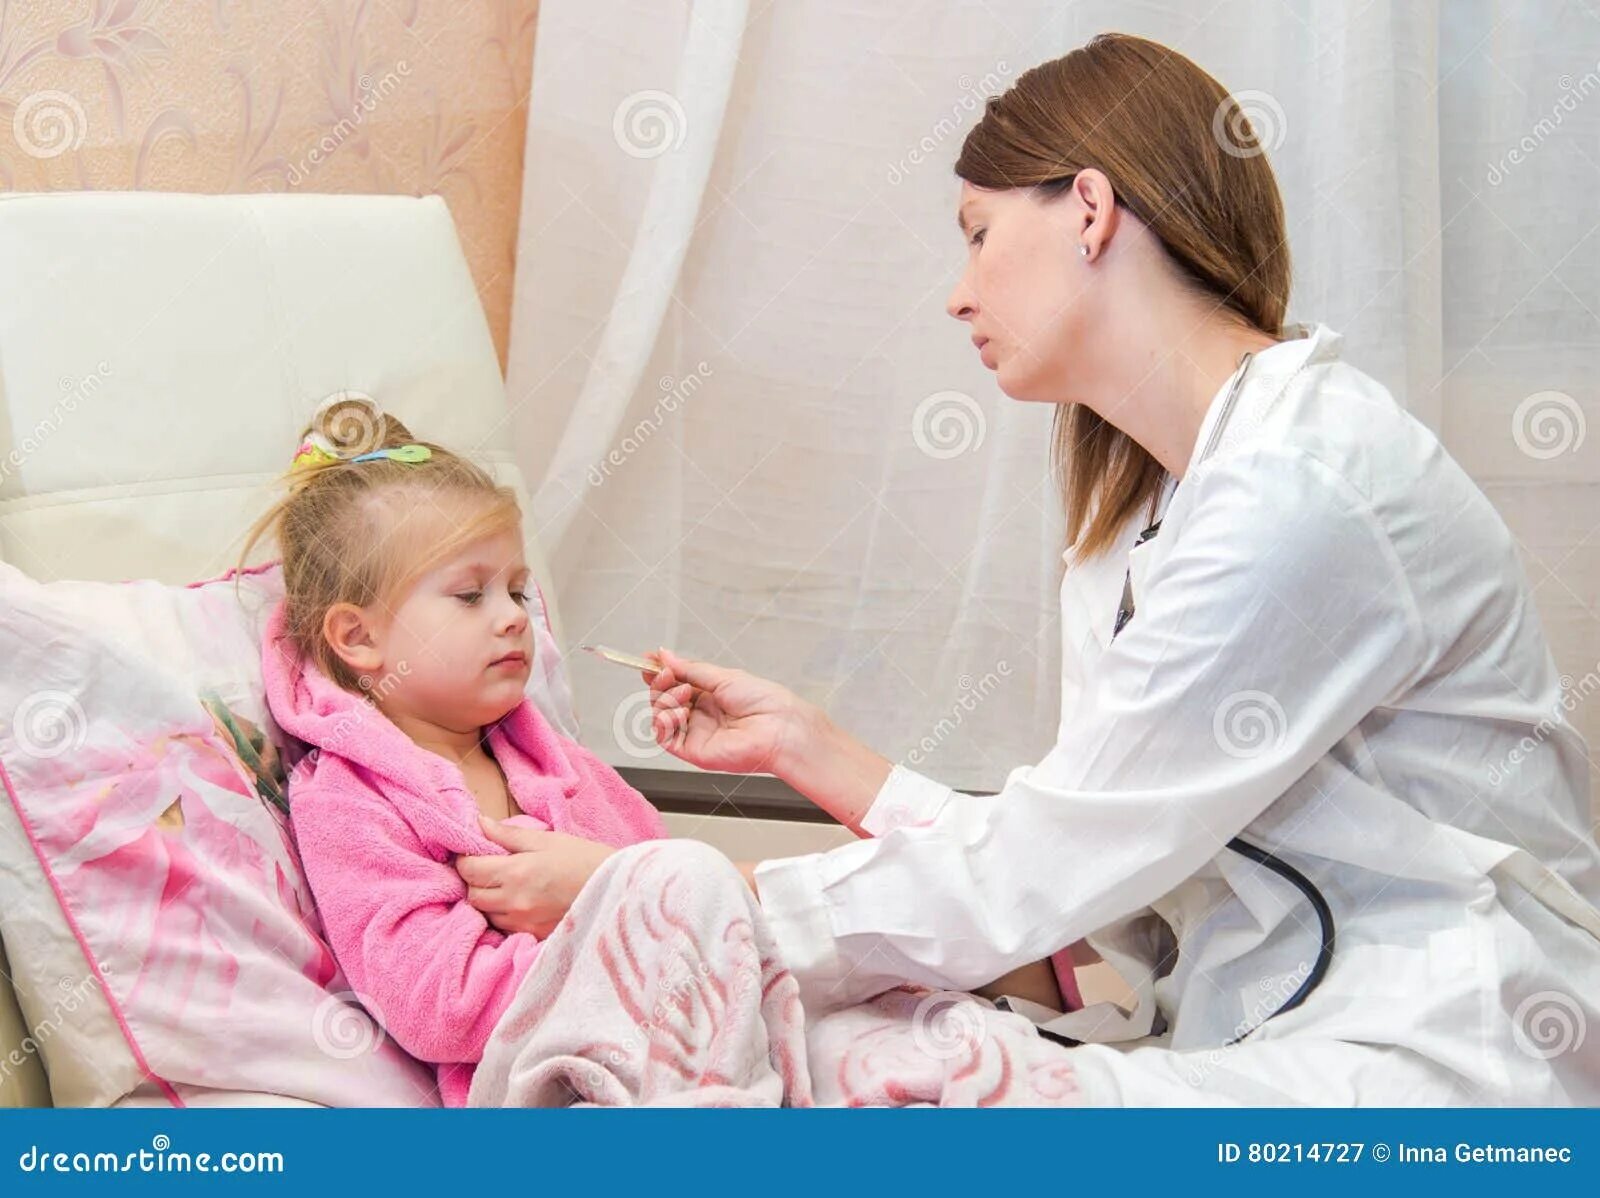 Врач температура. Врач измеряет температуру. Медсестра измеряет температуру. Медсестра измеряет температуру ребенку. Доктор измеряет температуру ребенку.